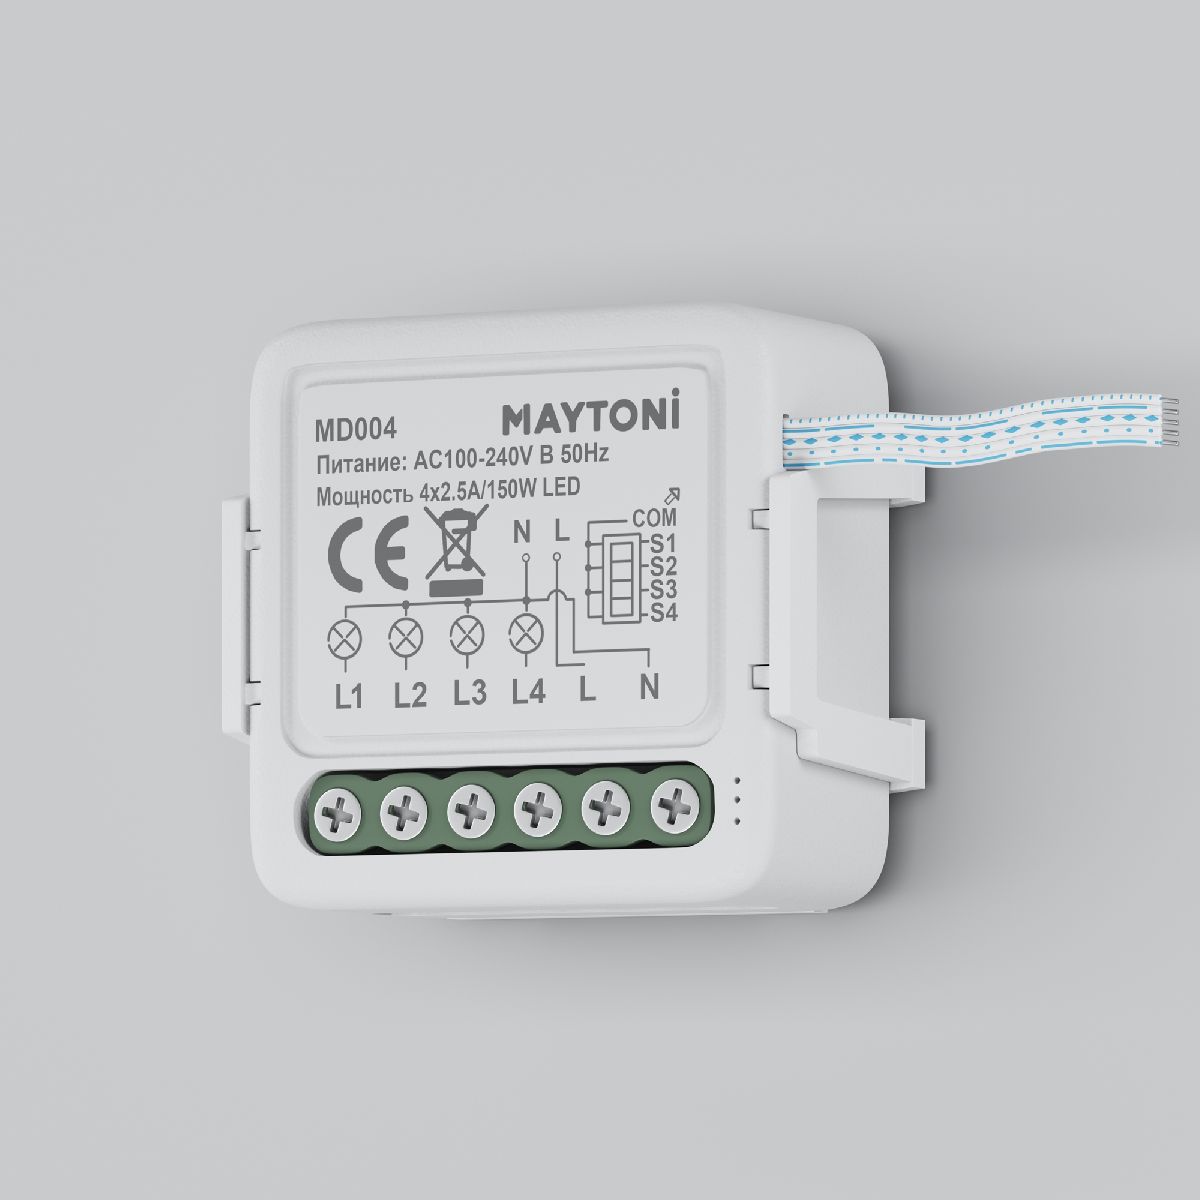 W-Fi выключатель четырехканальный Maytoni Smart home MD004